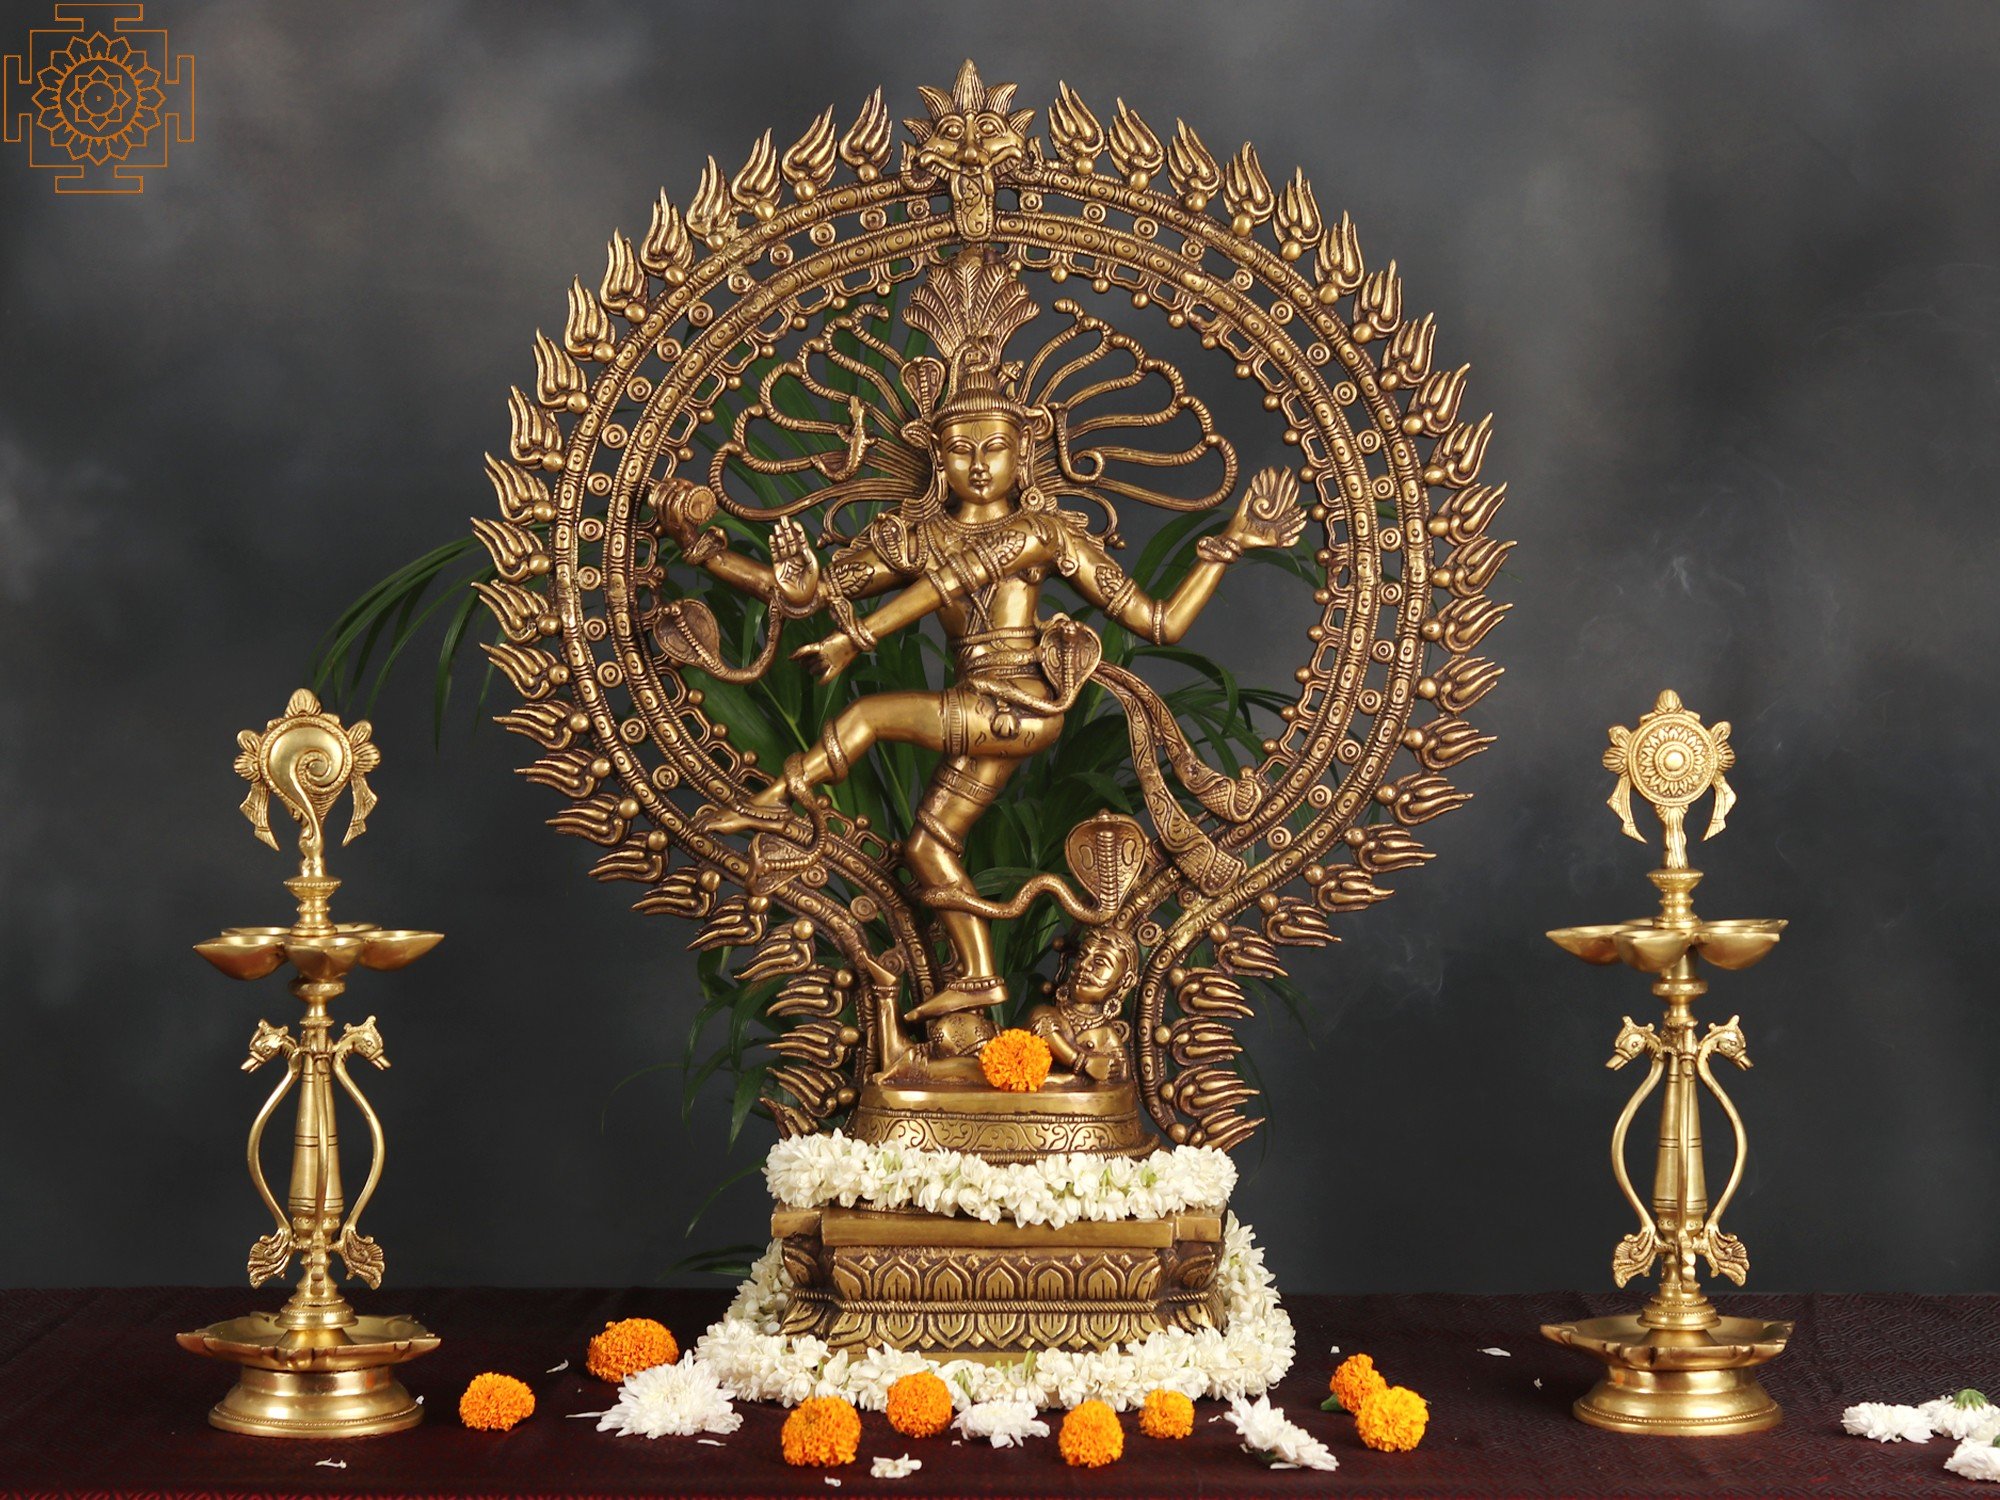 Statue of indian hindu god Shiva Nataraja - Lord of Dance Stock Photo